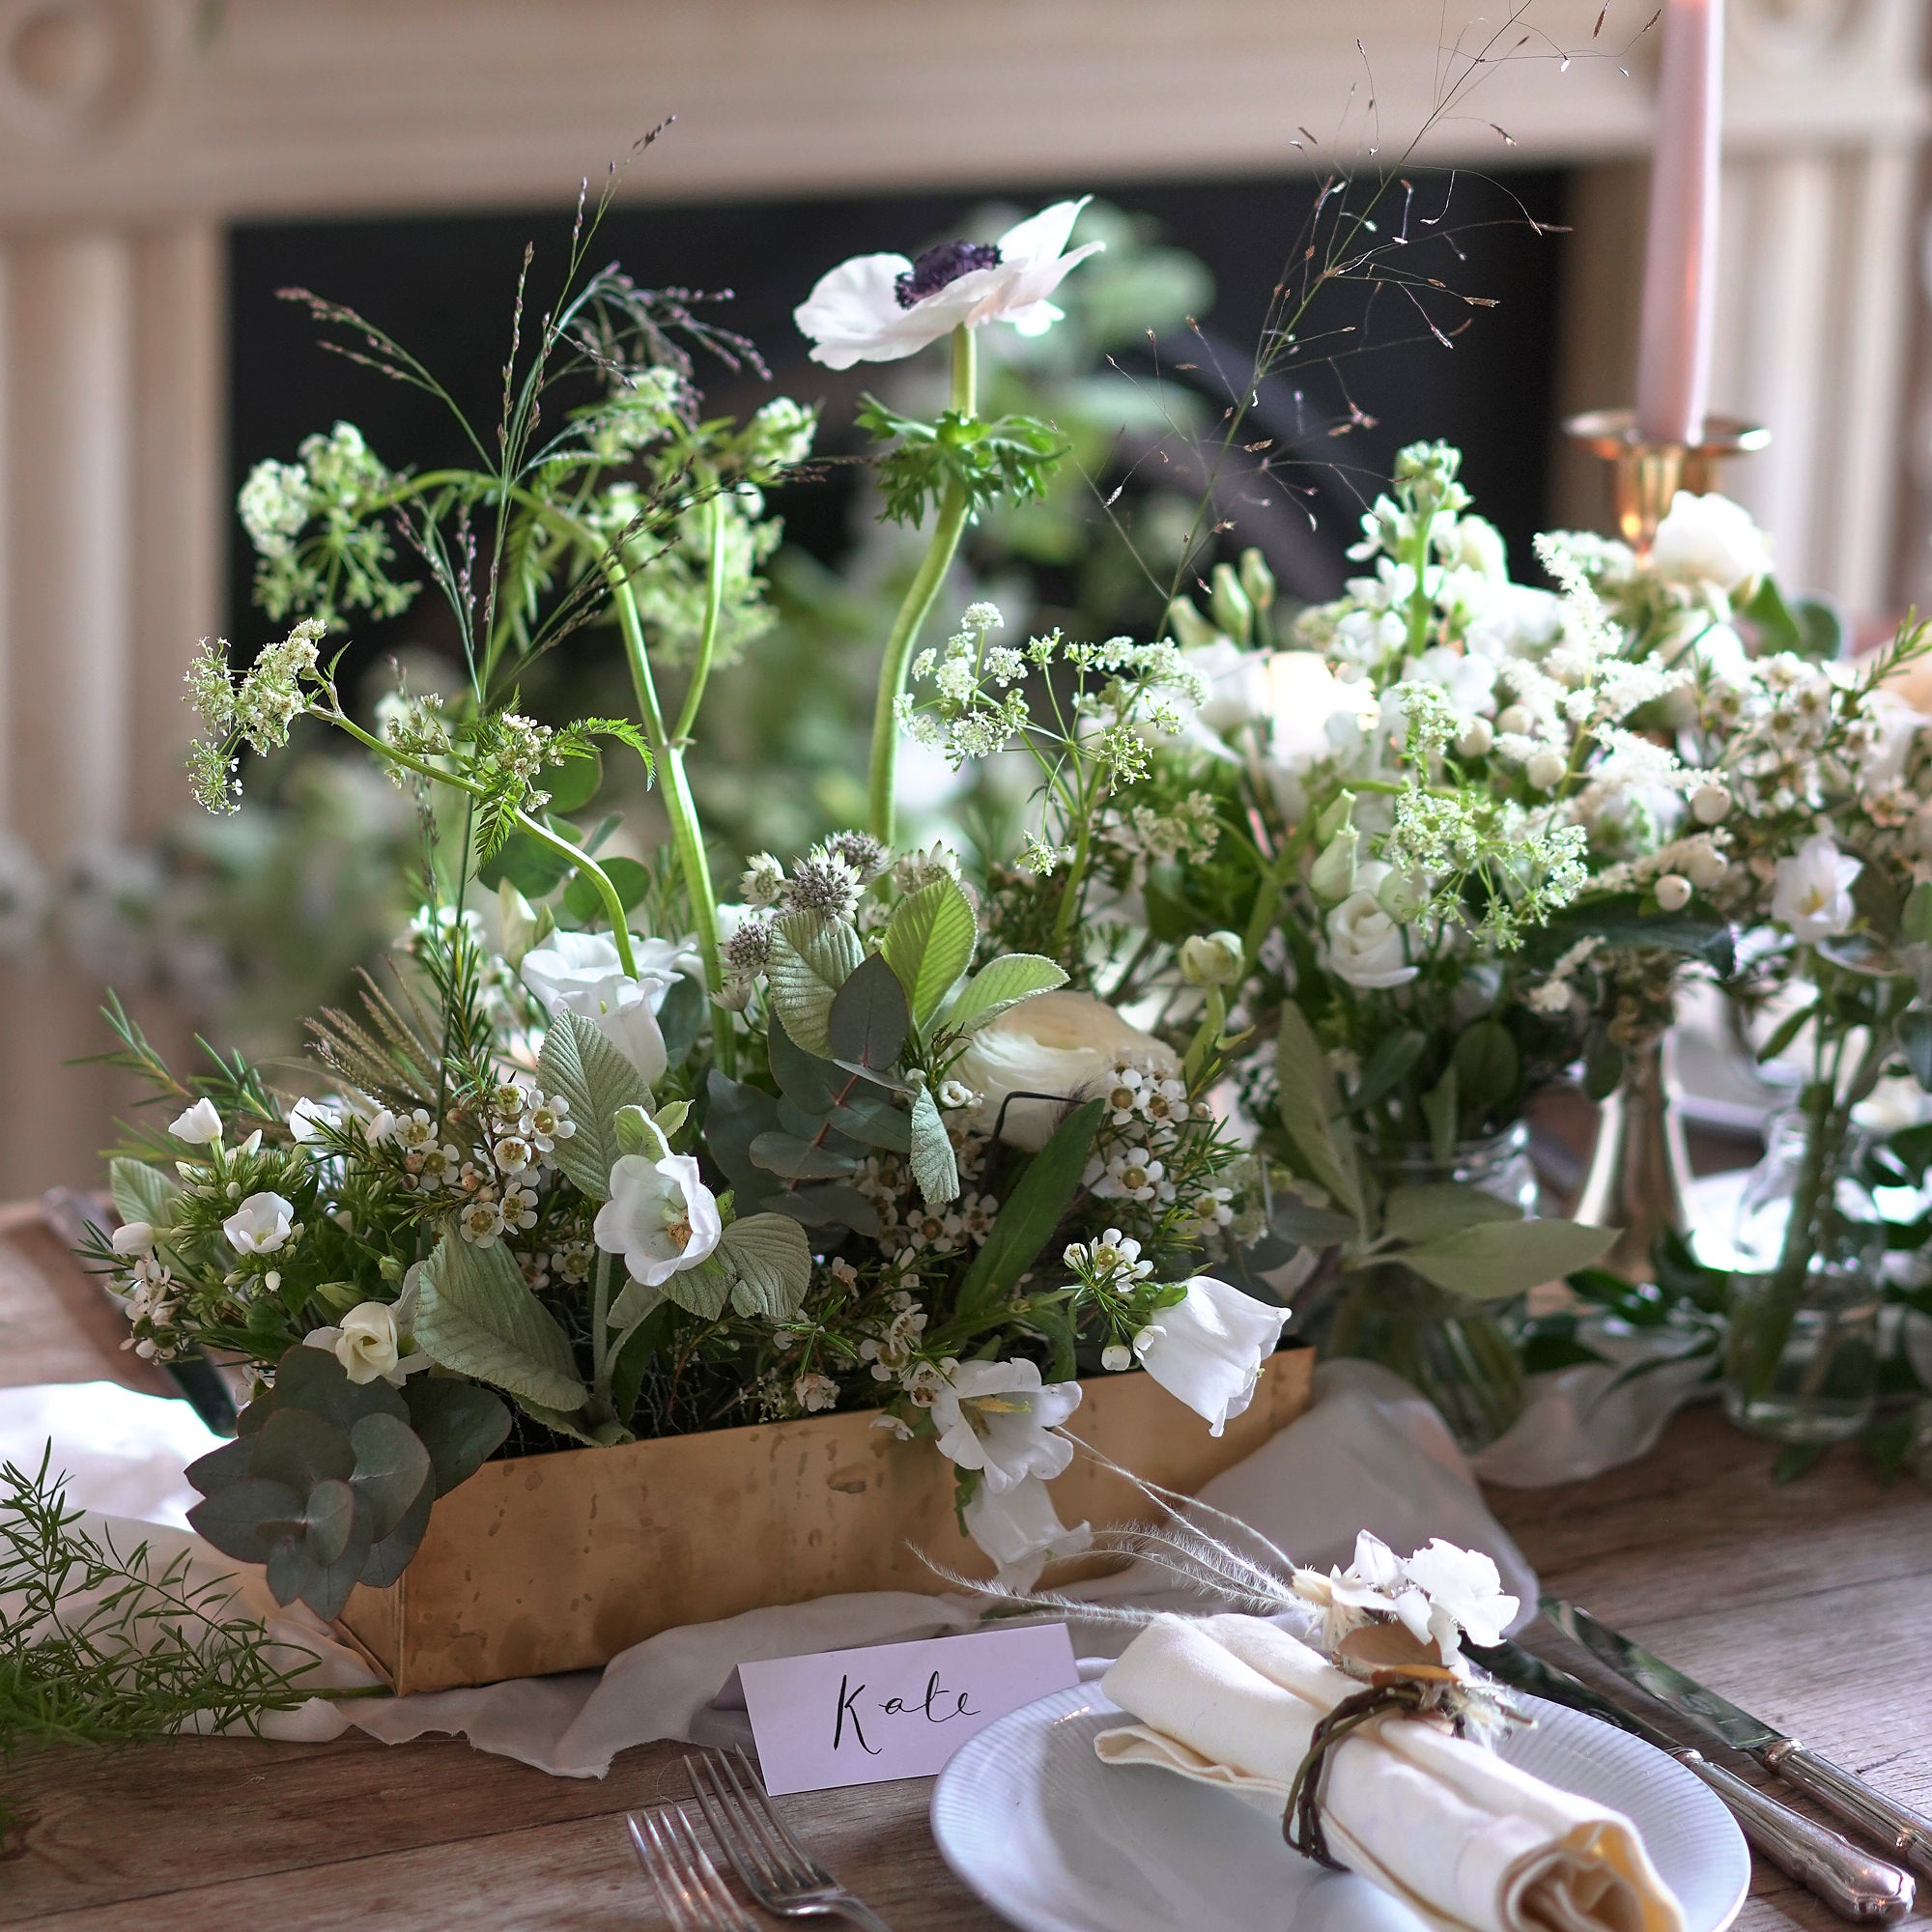 classic white wedding flowers through arrangement to decorate wedding venue by Botanique Workshop